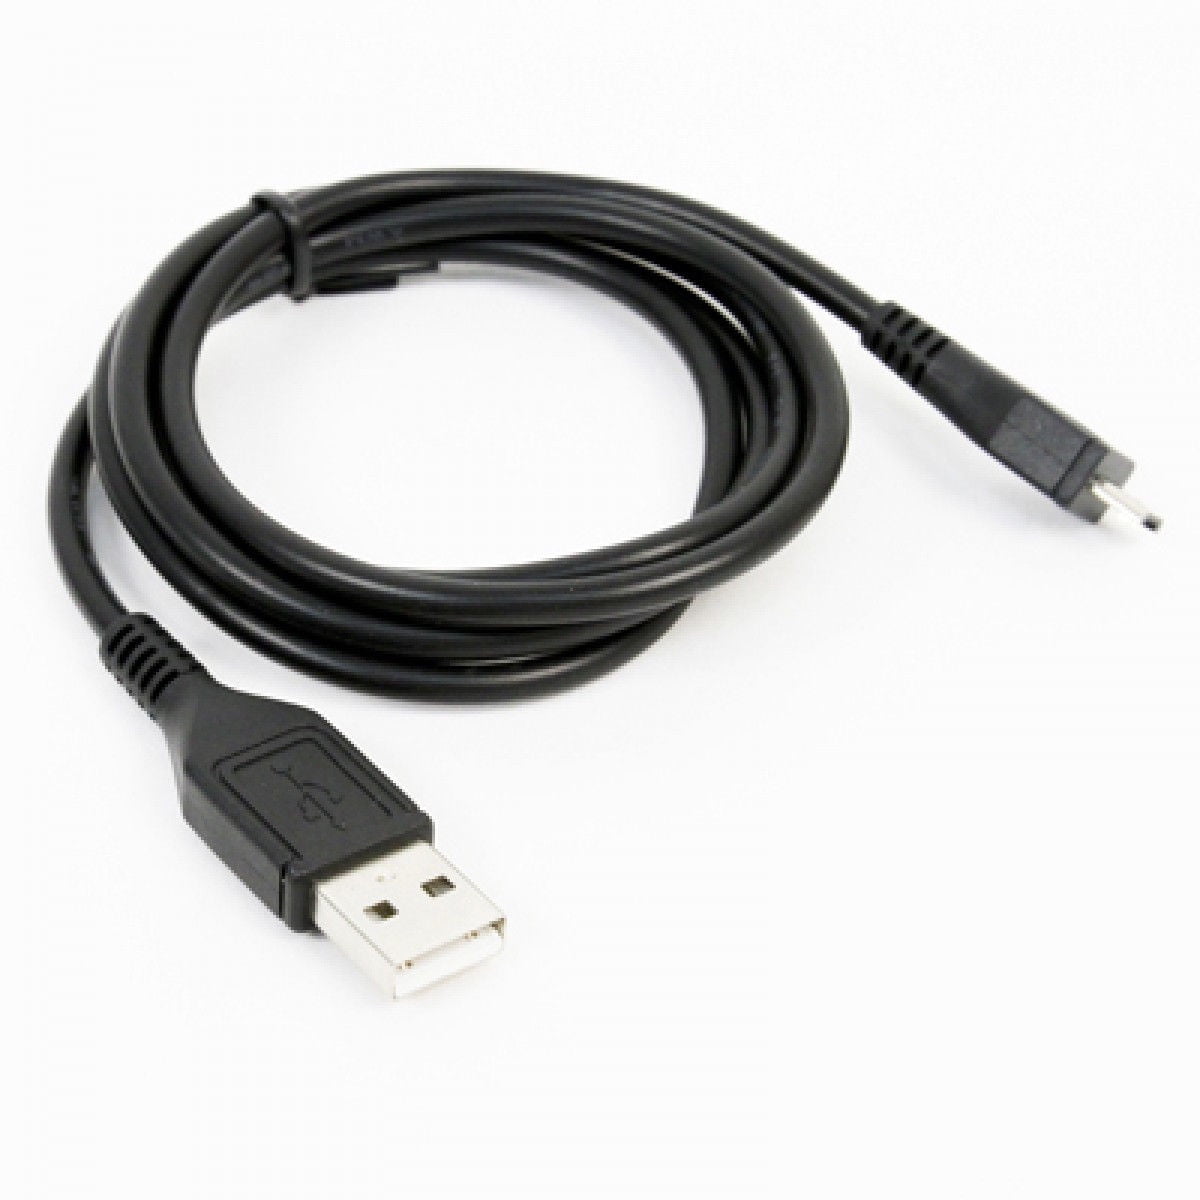 PANASONIC LUMIX DMC-TZ55EB-K CAM 16MP 20X LCD BLK DIGITAL CAMERA USB CABLE /LEAD 